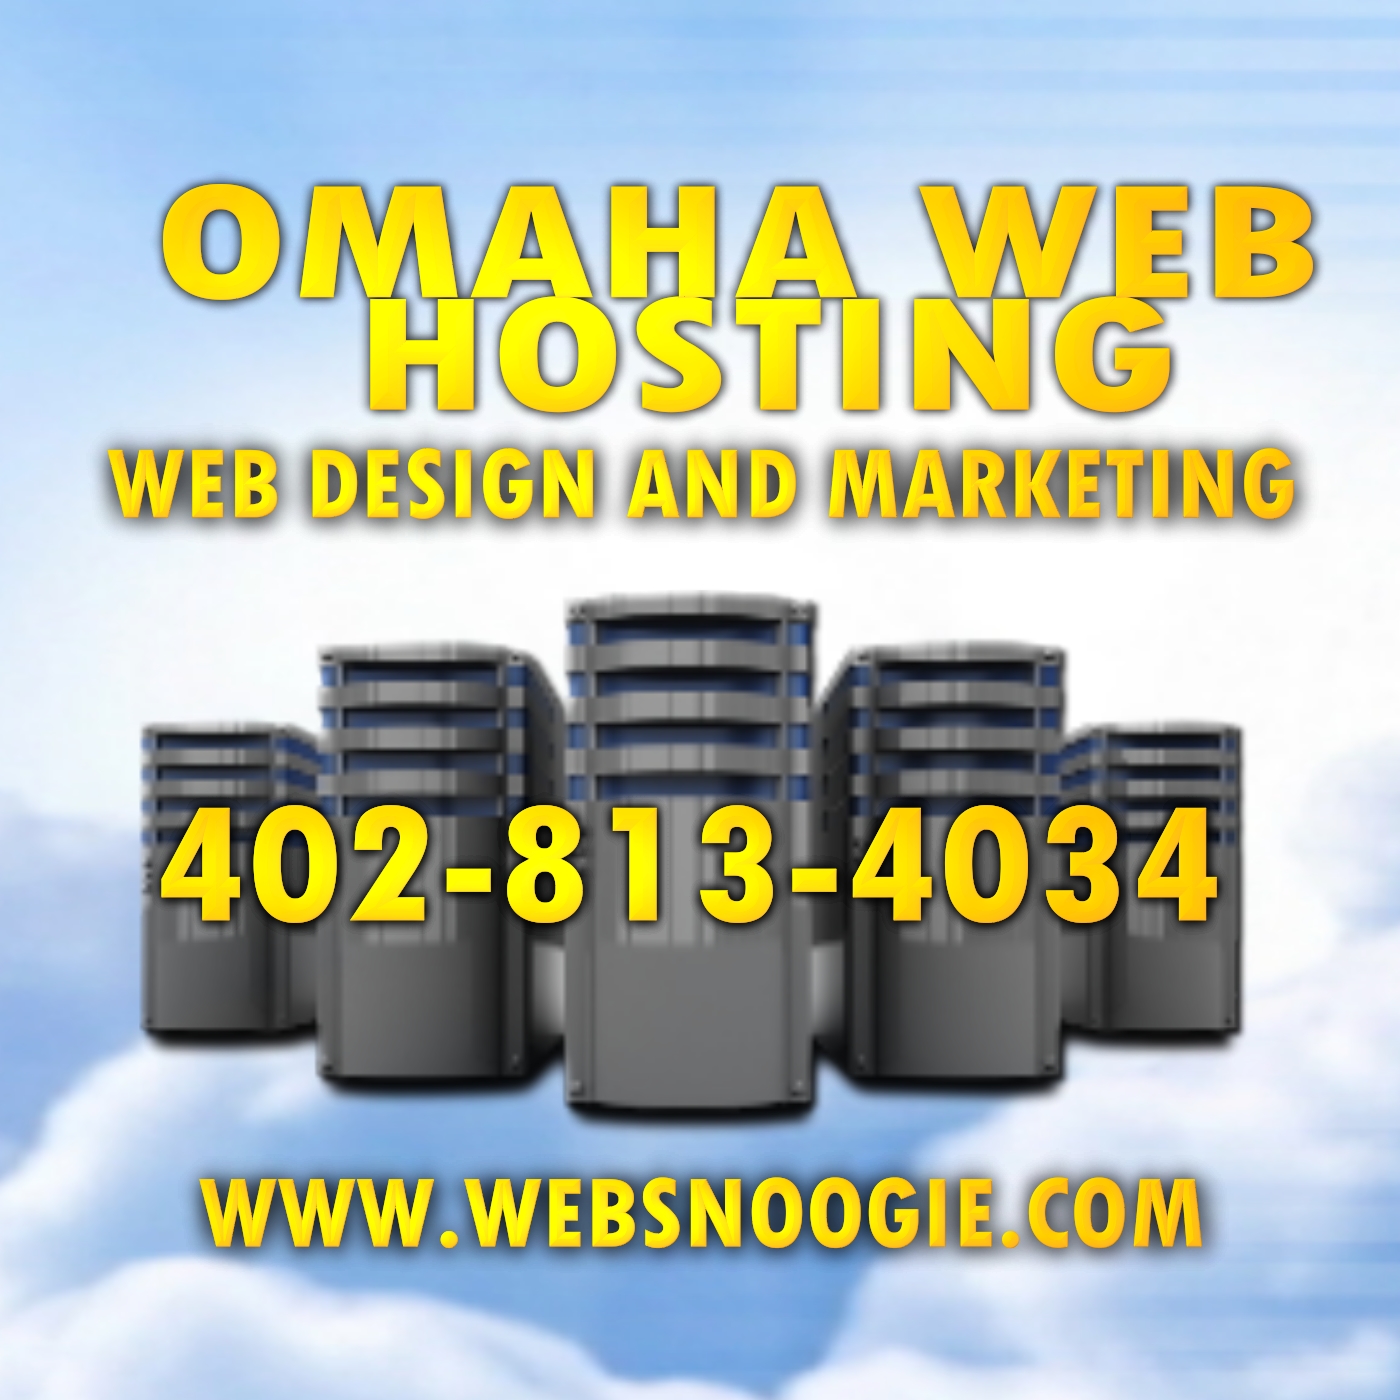 Websnoogie offers affordable SEO, web design, and hosting in Omaha, Nebraska.